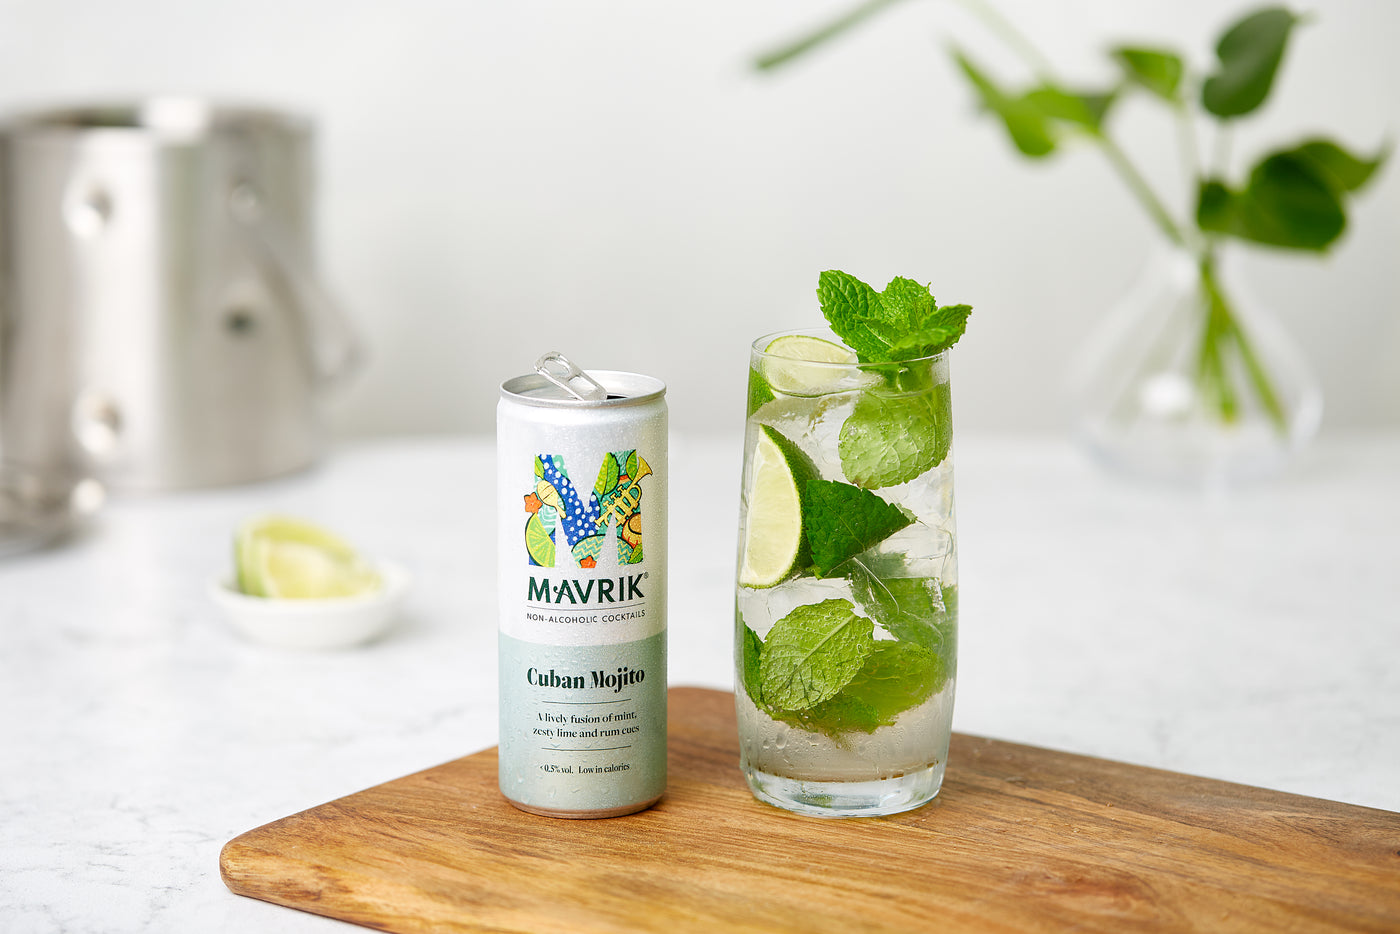 Mavrik drinks Canada - Mavrik drinks USA - delicious cuban mojito cocktail - best non-alcoholic cocktails